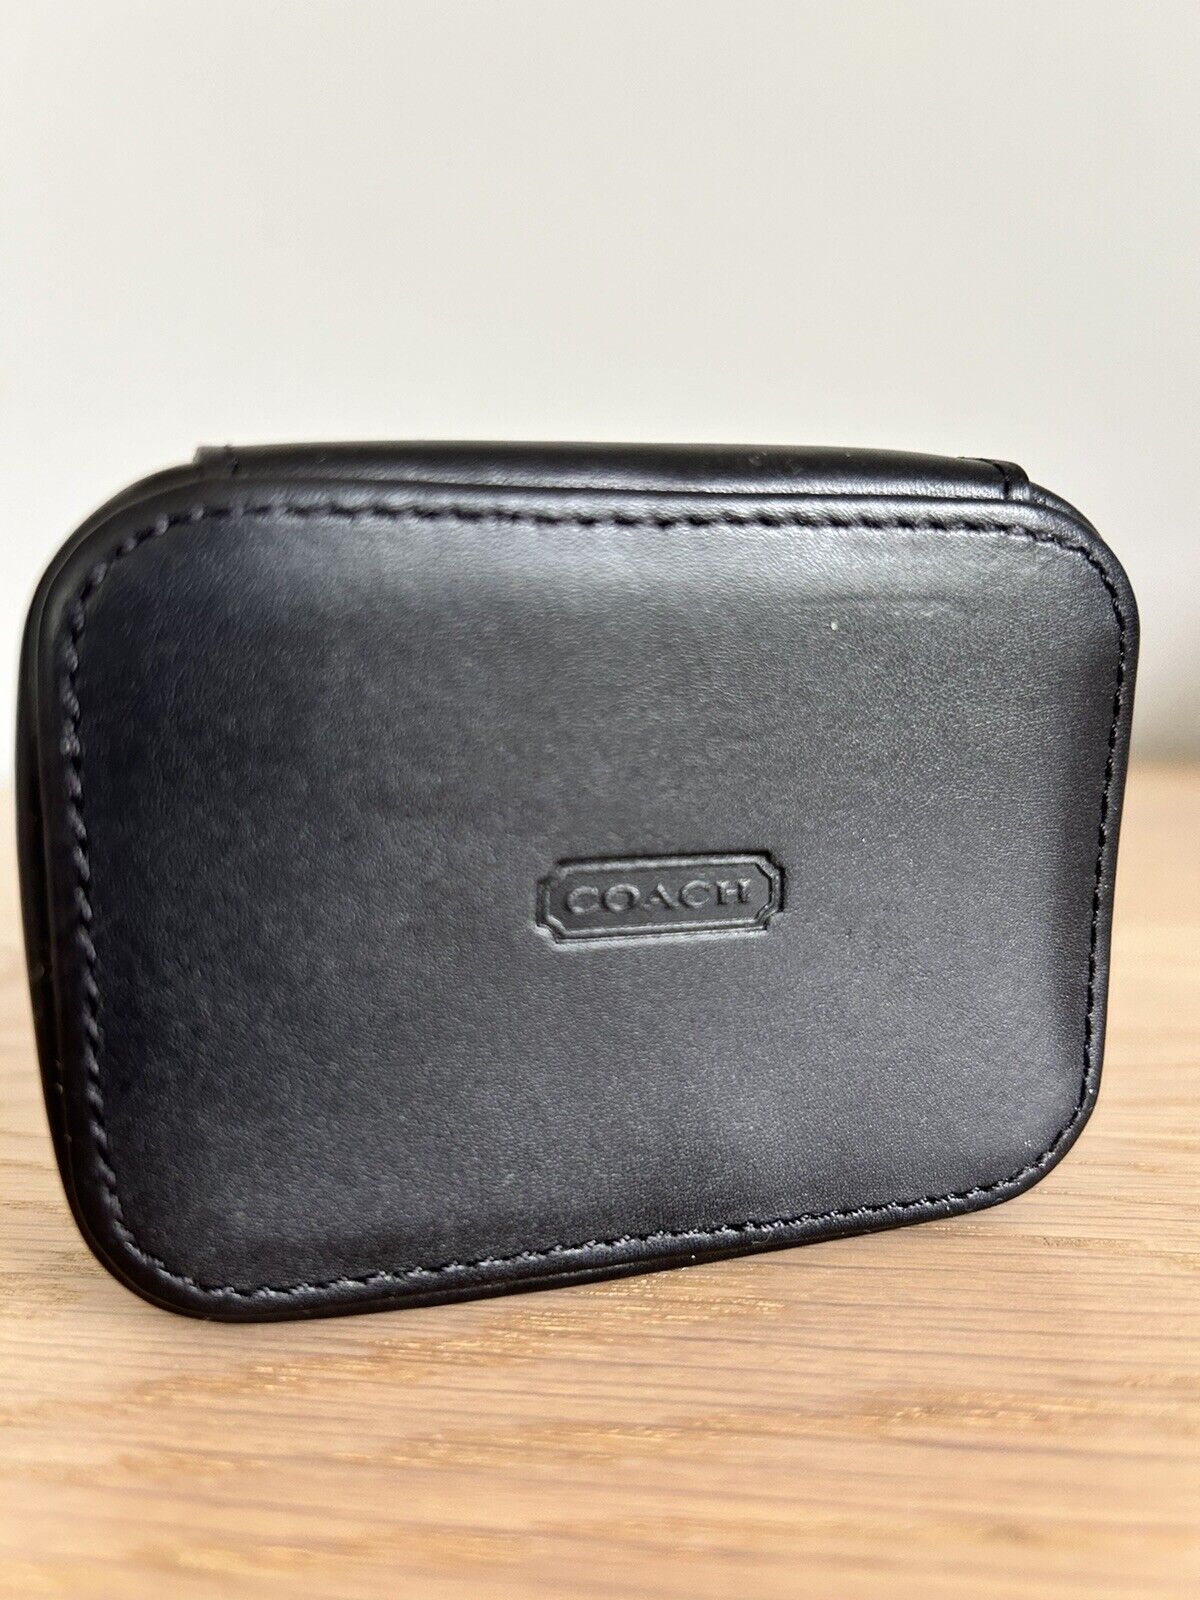 COACH Authentic Black Leather Pill Box RARE 